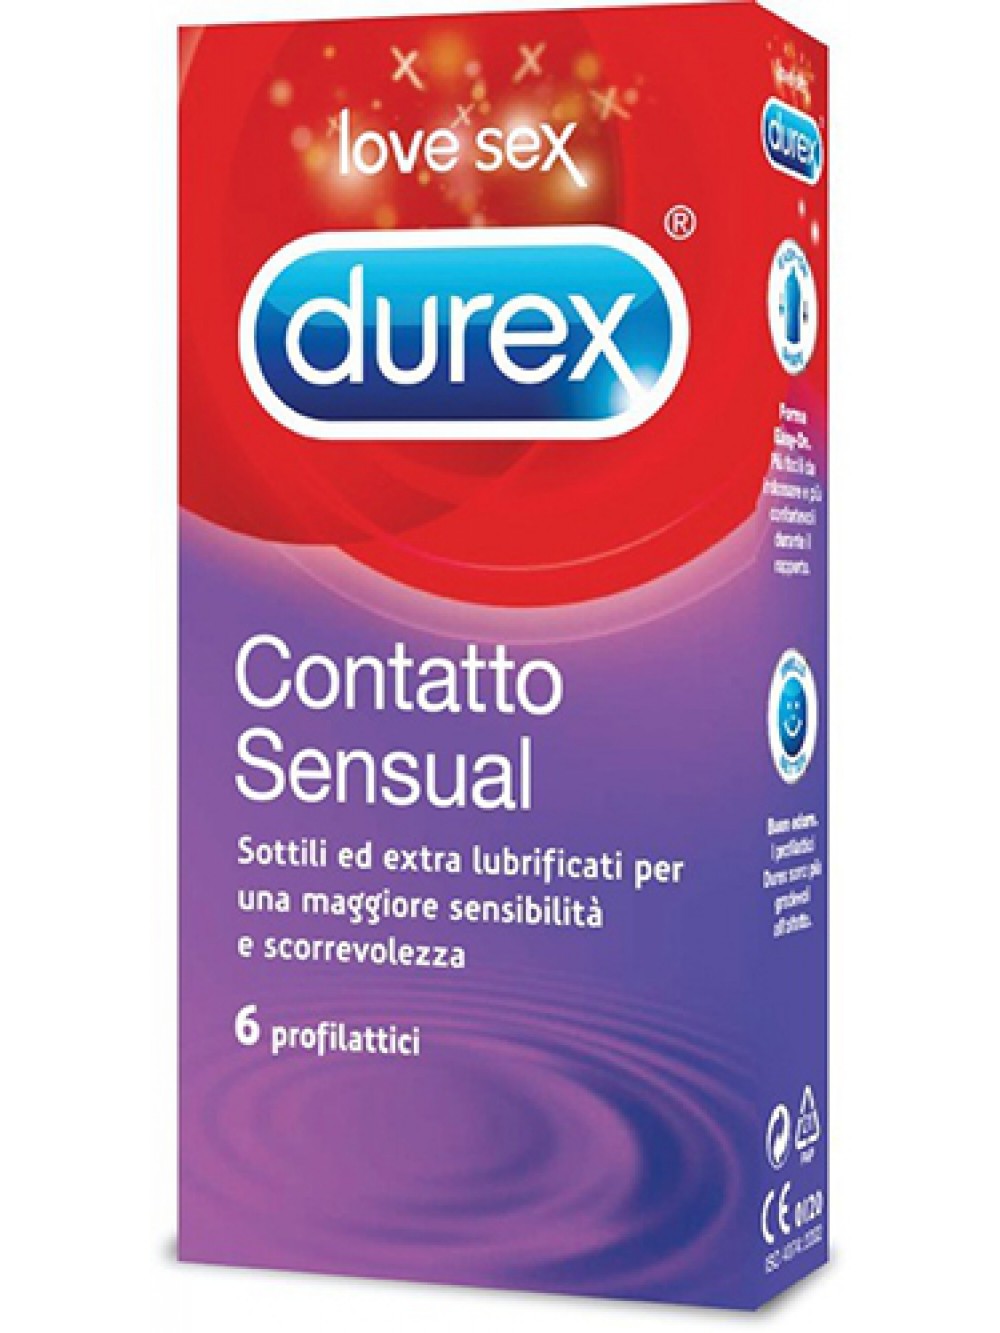 Durex Contatto Sensual 5038483445259 